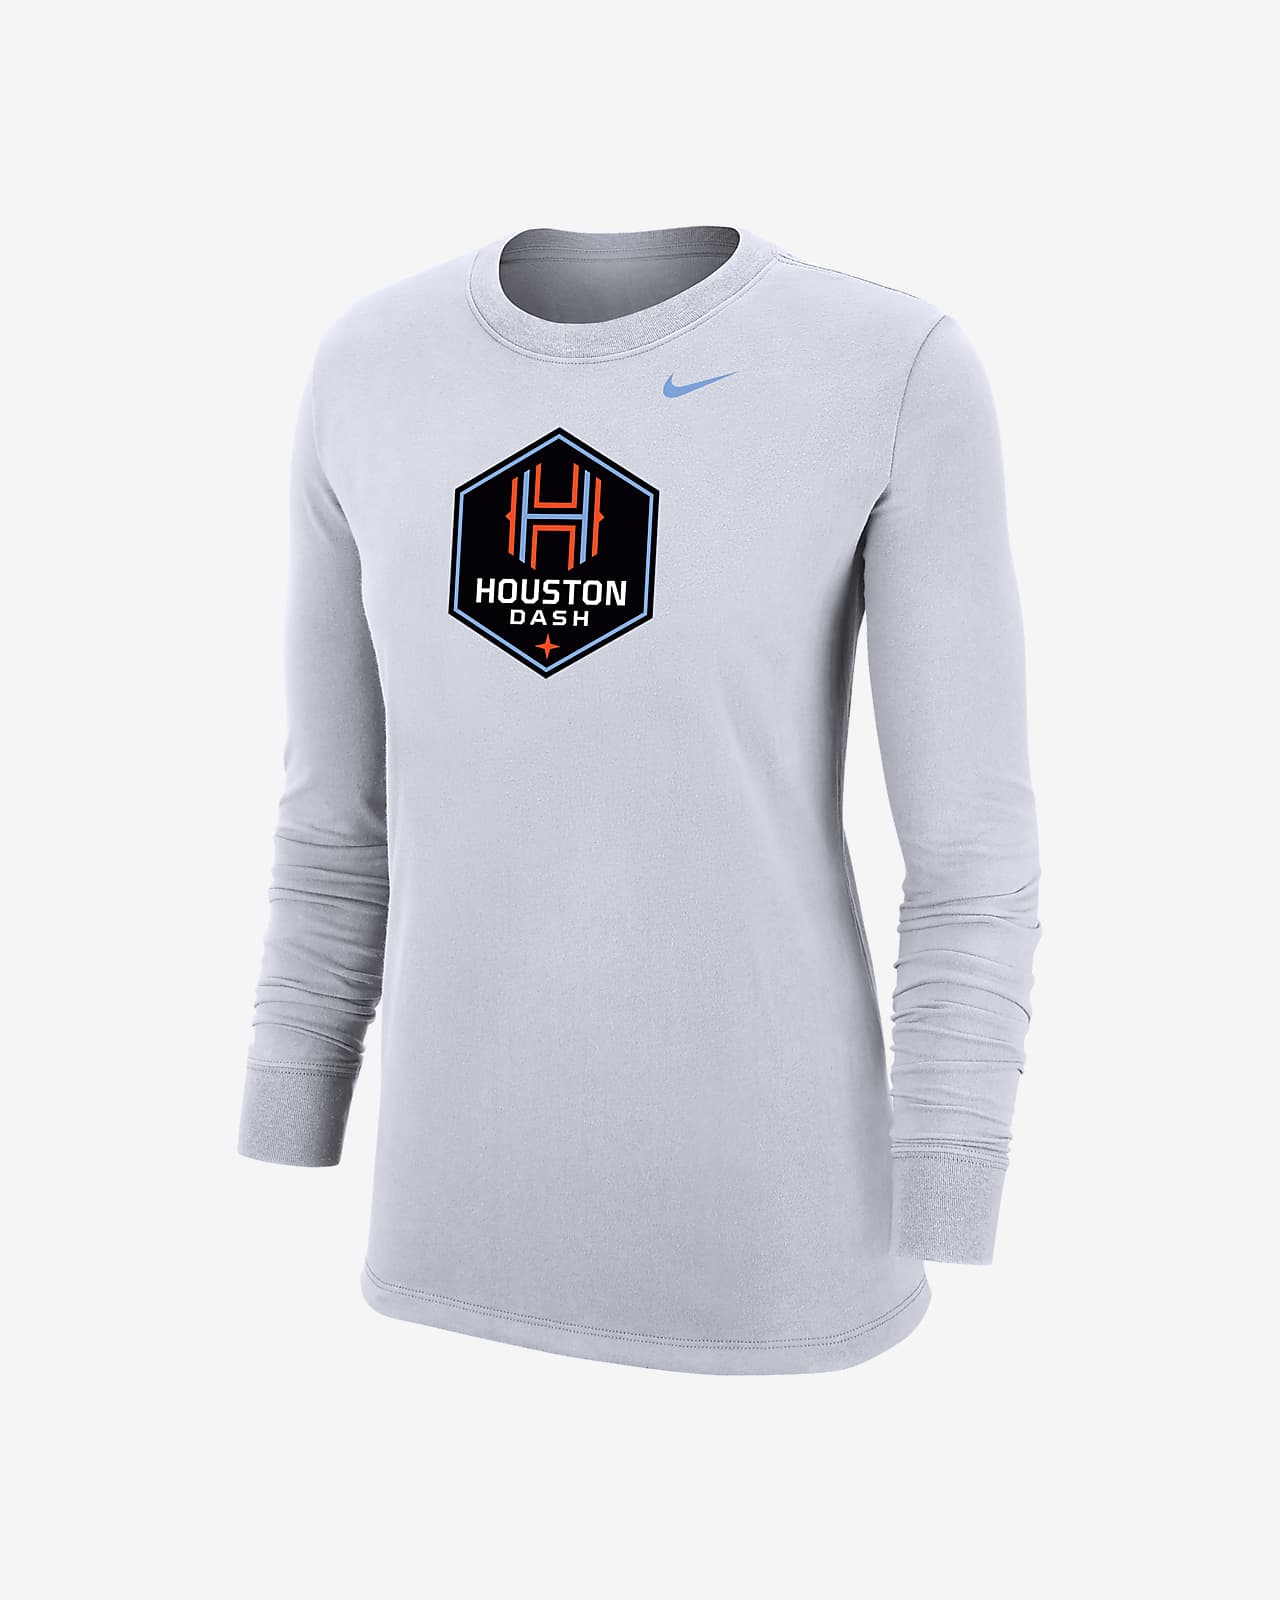 Houston Dash Women's Nike Soccer Long-Sleeve T-Shirt